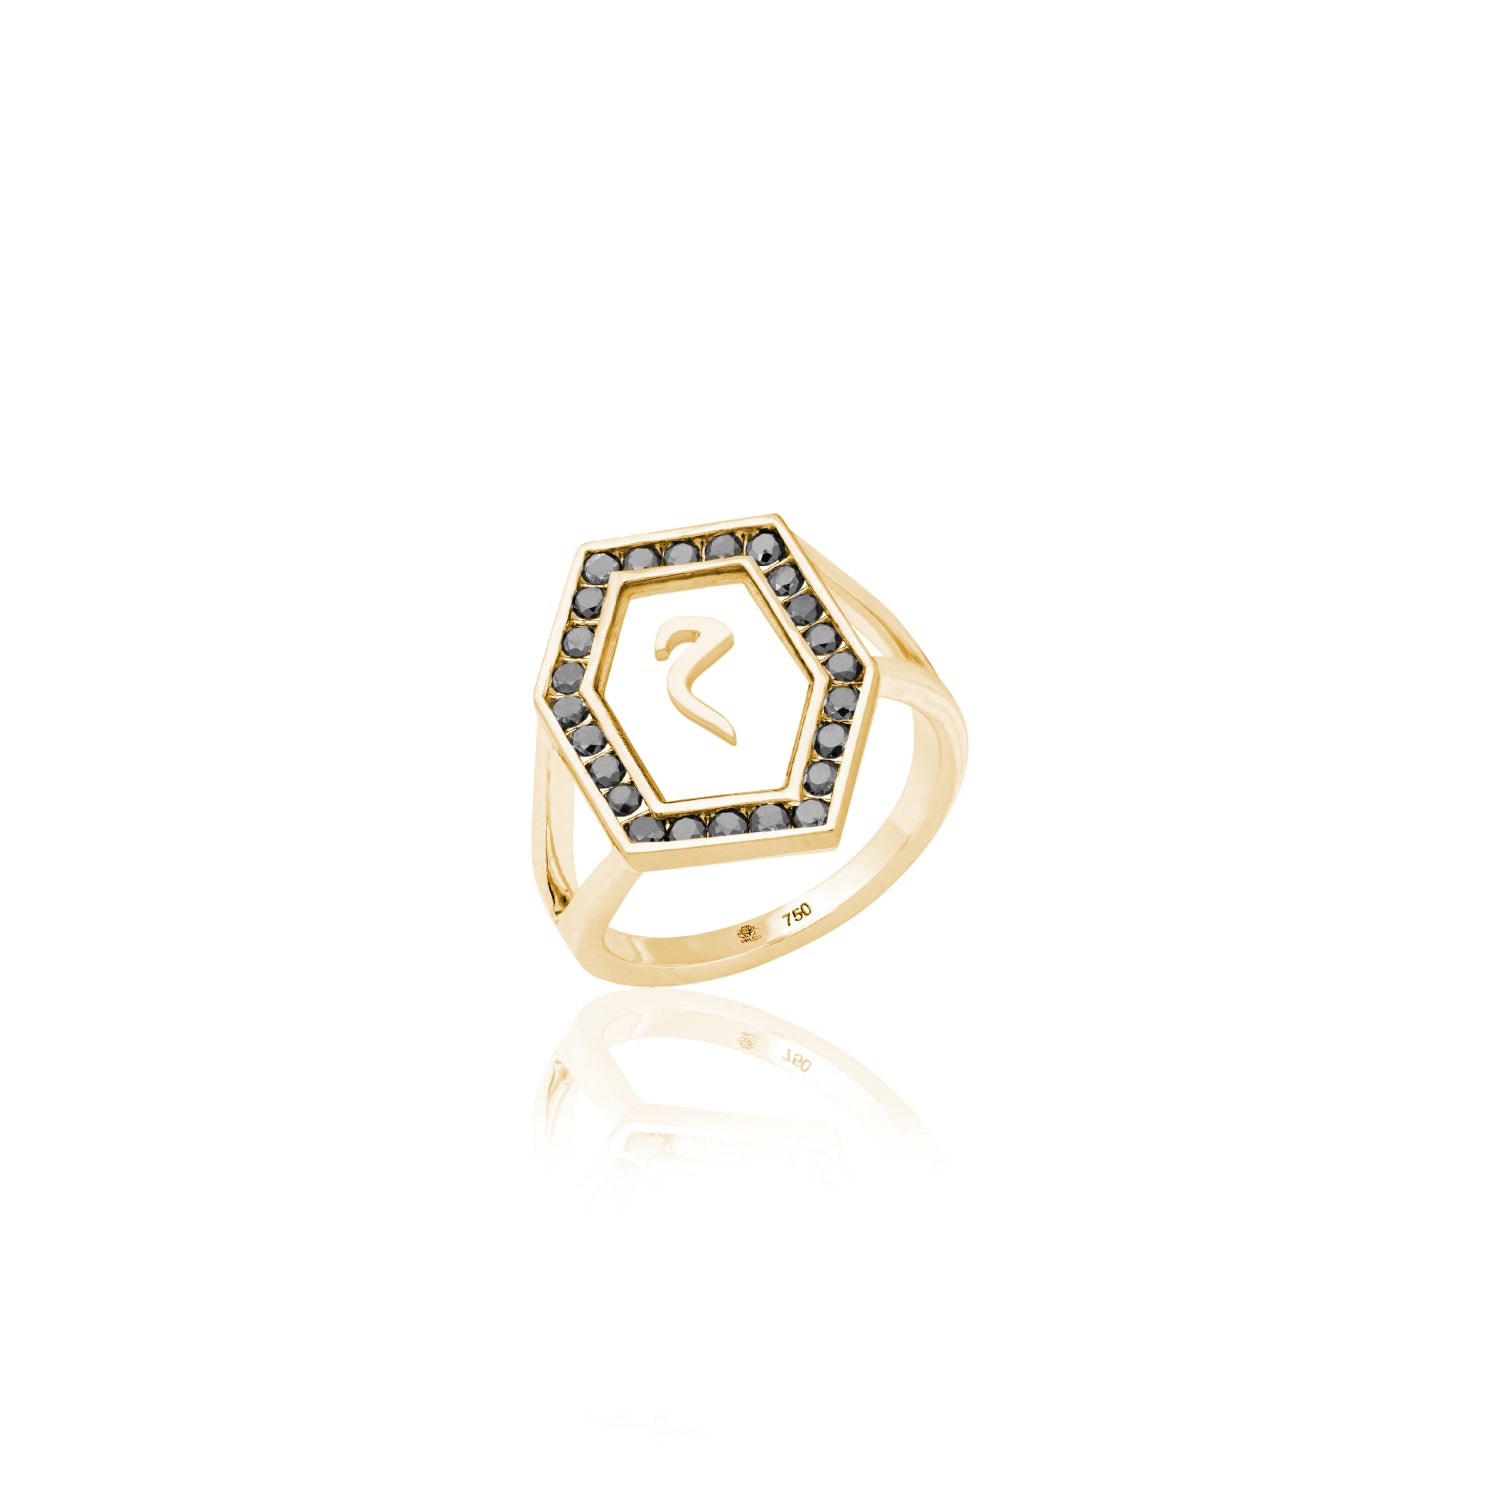 Qamoos 1.0 Letter م Black Diamond Ring in Yellow Gold